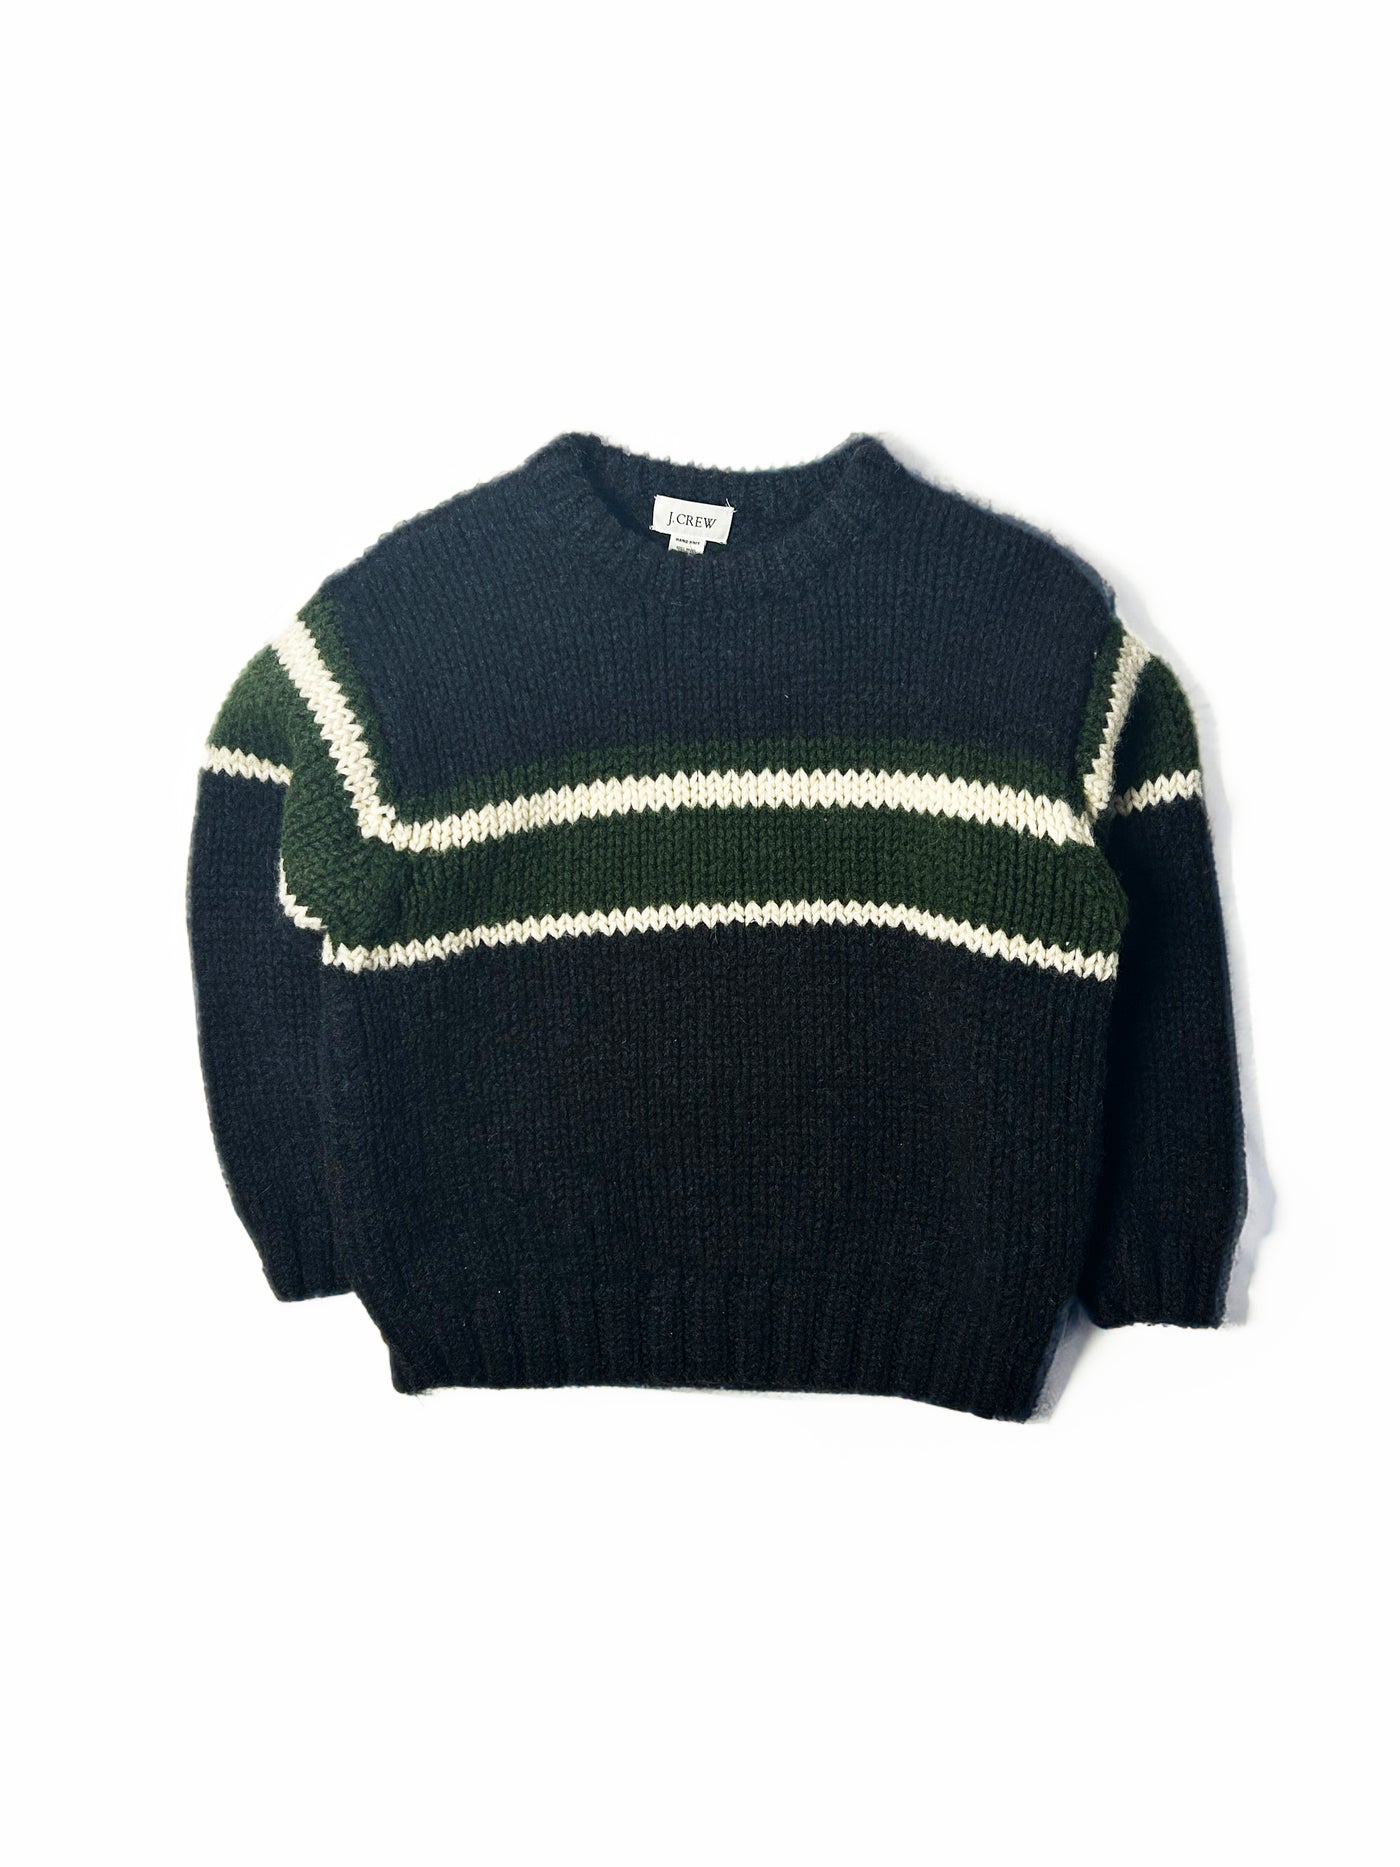 2000s J Crew Hand-Knit 100% Wool Sweater